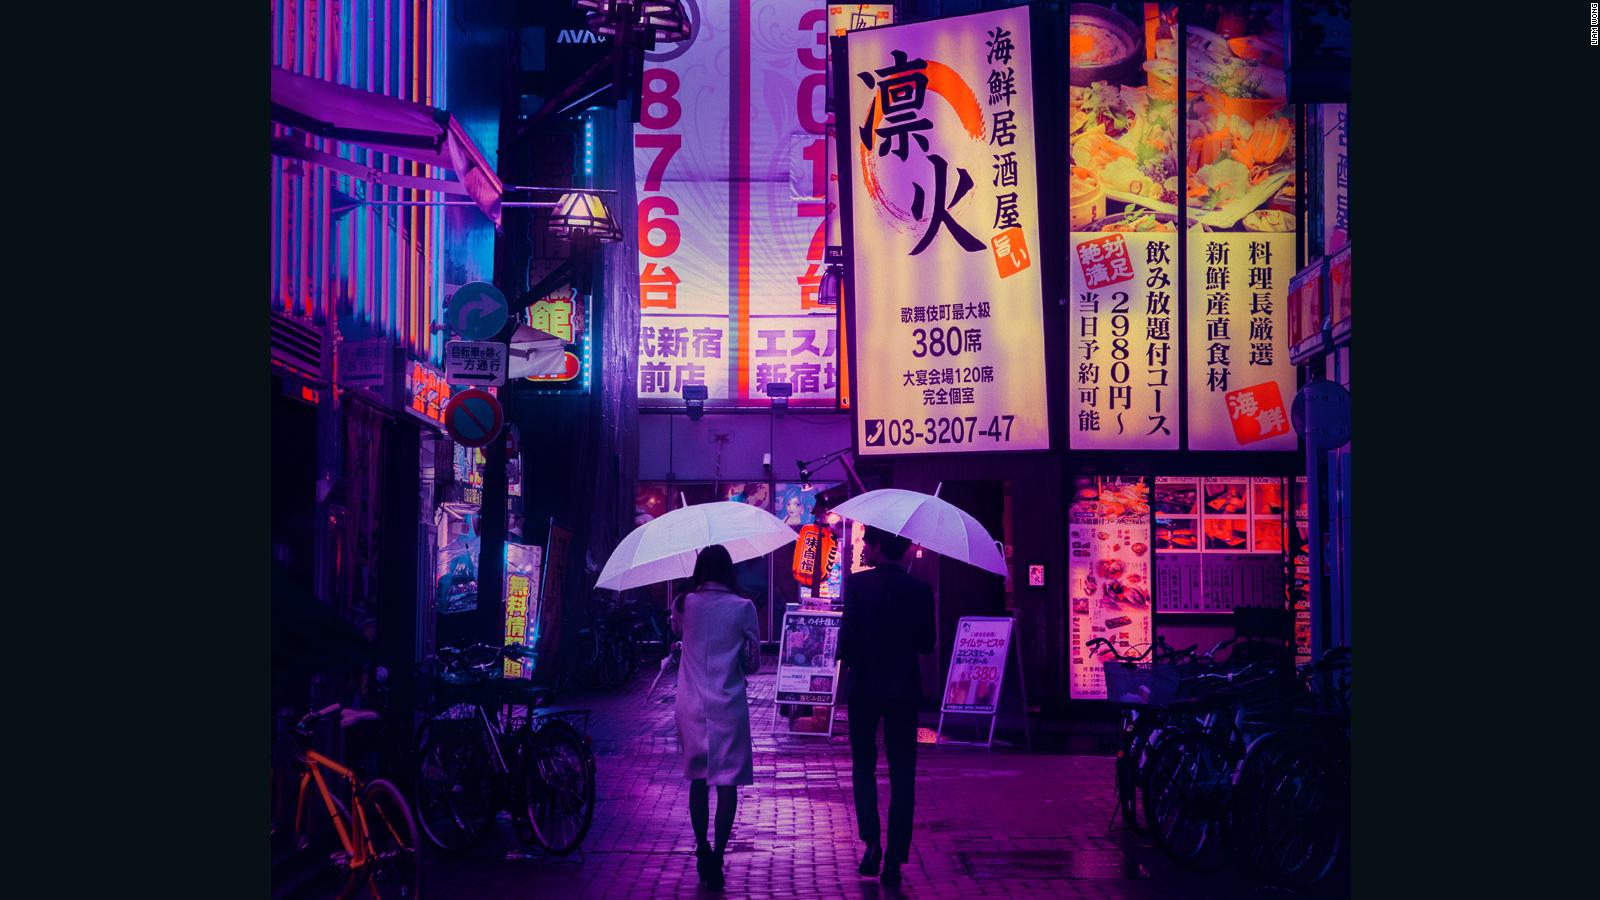 A couple walks under umbrellas in a Tokyo street at night. - Tokyo